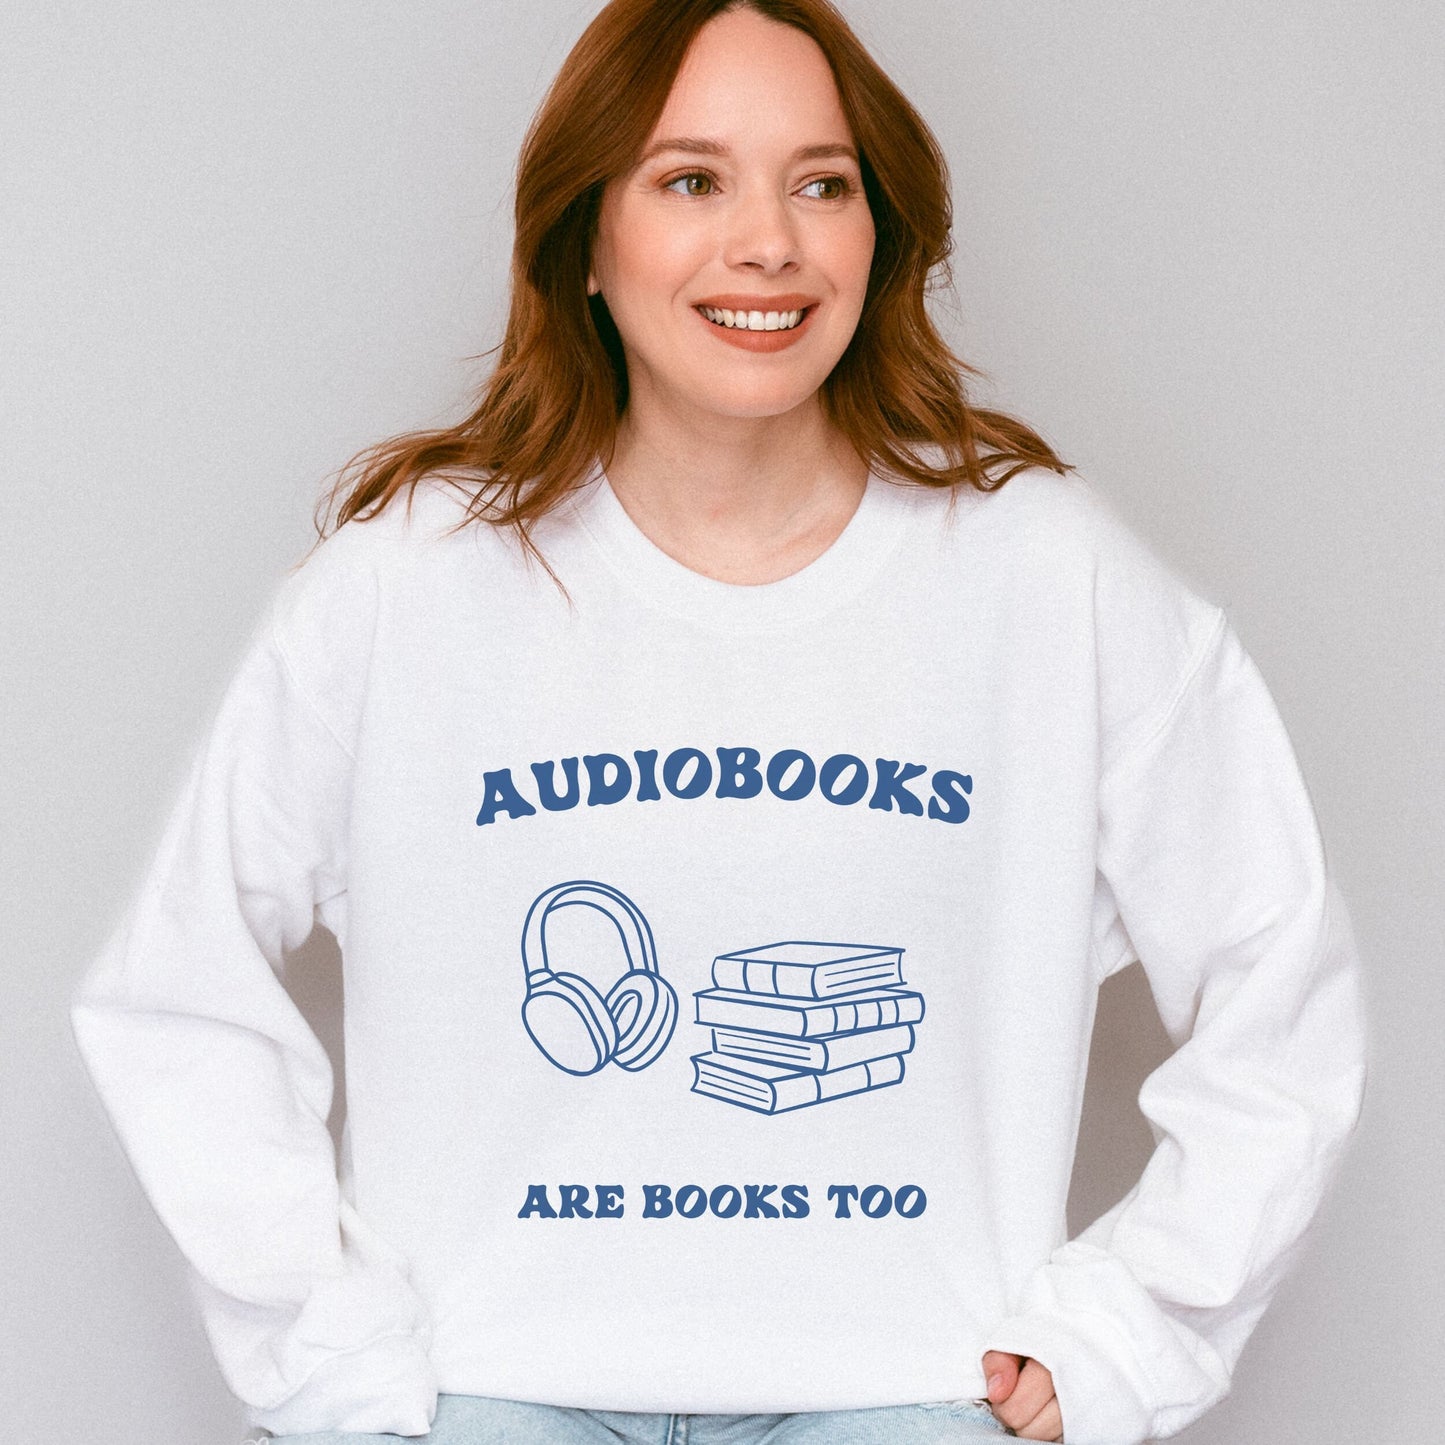 Audiobooks Are Books Too, Audiobook Shirt Read Sweatshirt, Romantasy Reader Booklover Gift Bookish Things Audiobook Lover Digital Book Shirt